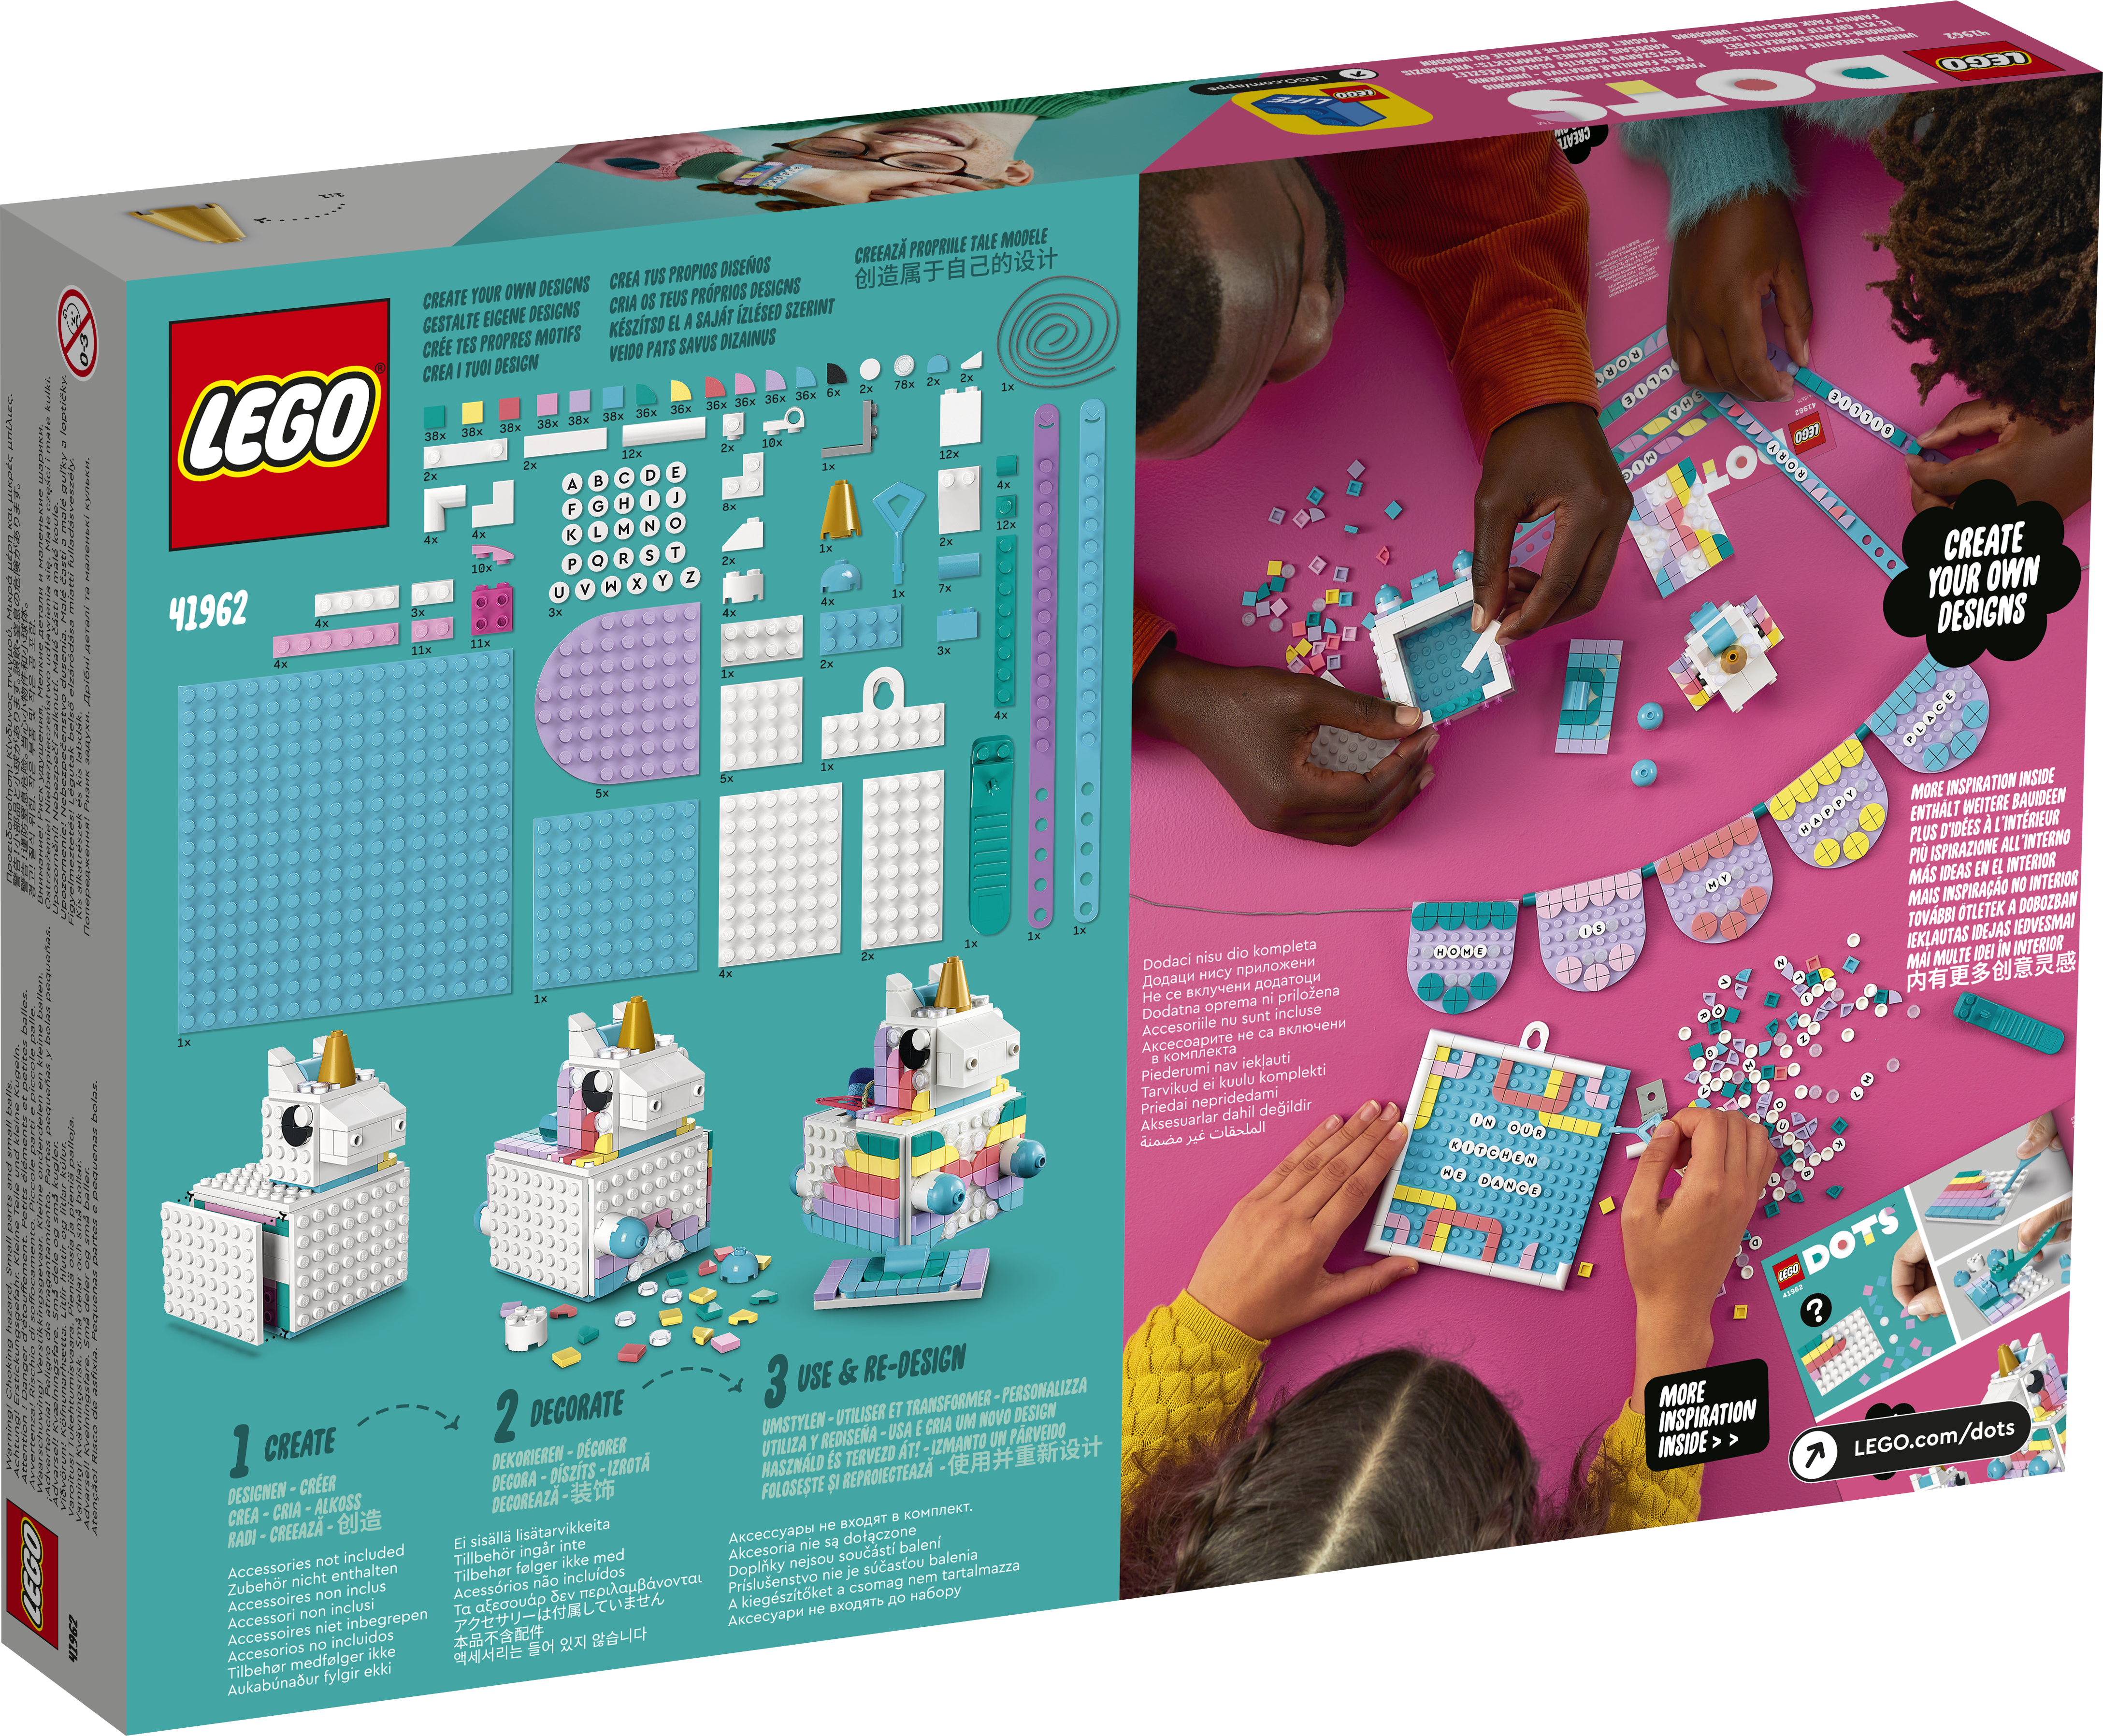 LEGO® DOTS 41962 Einhorn Familienkreativset